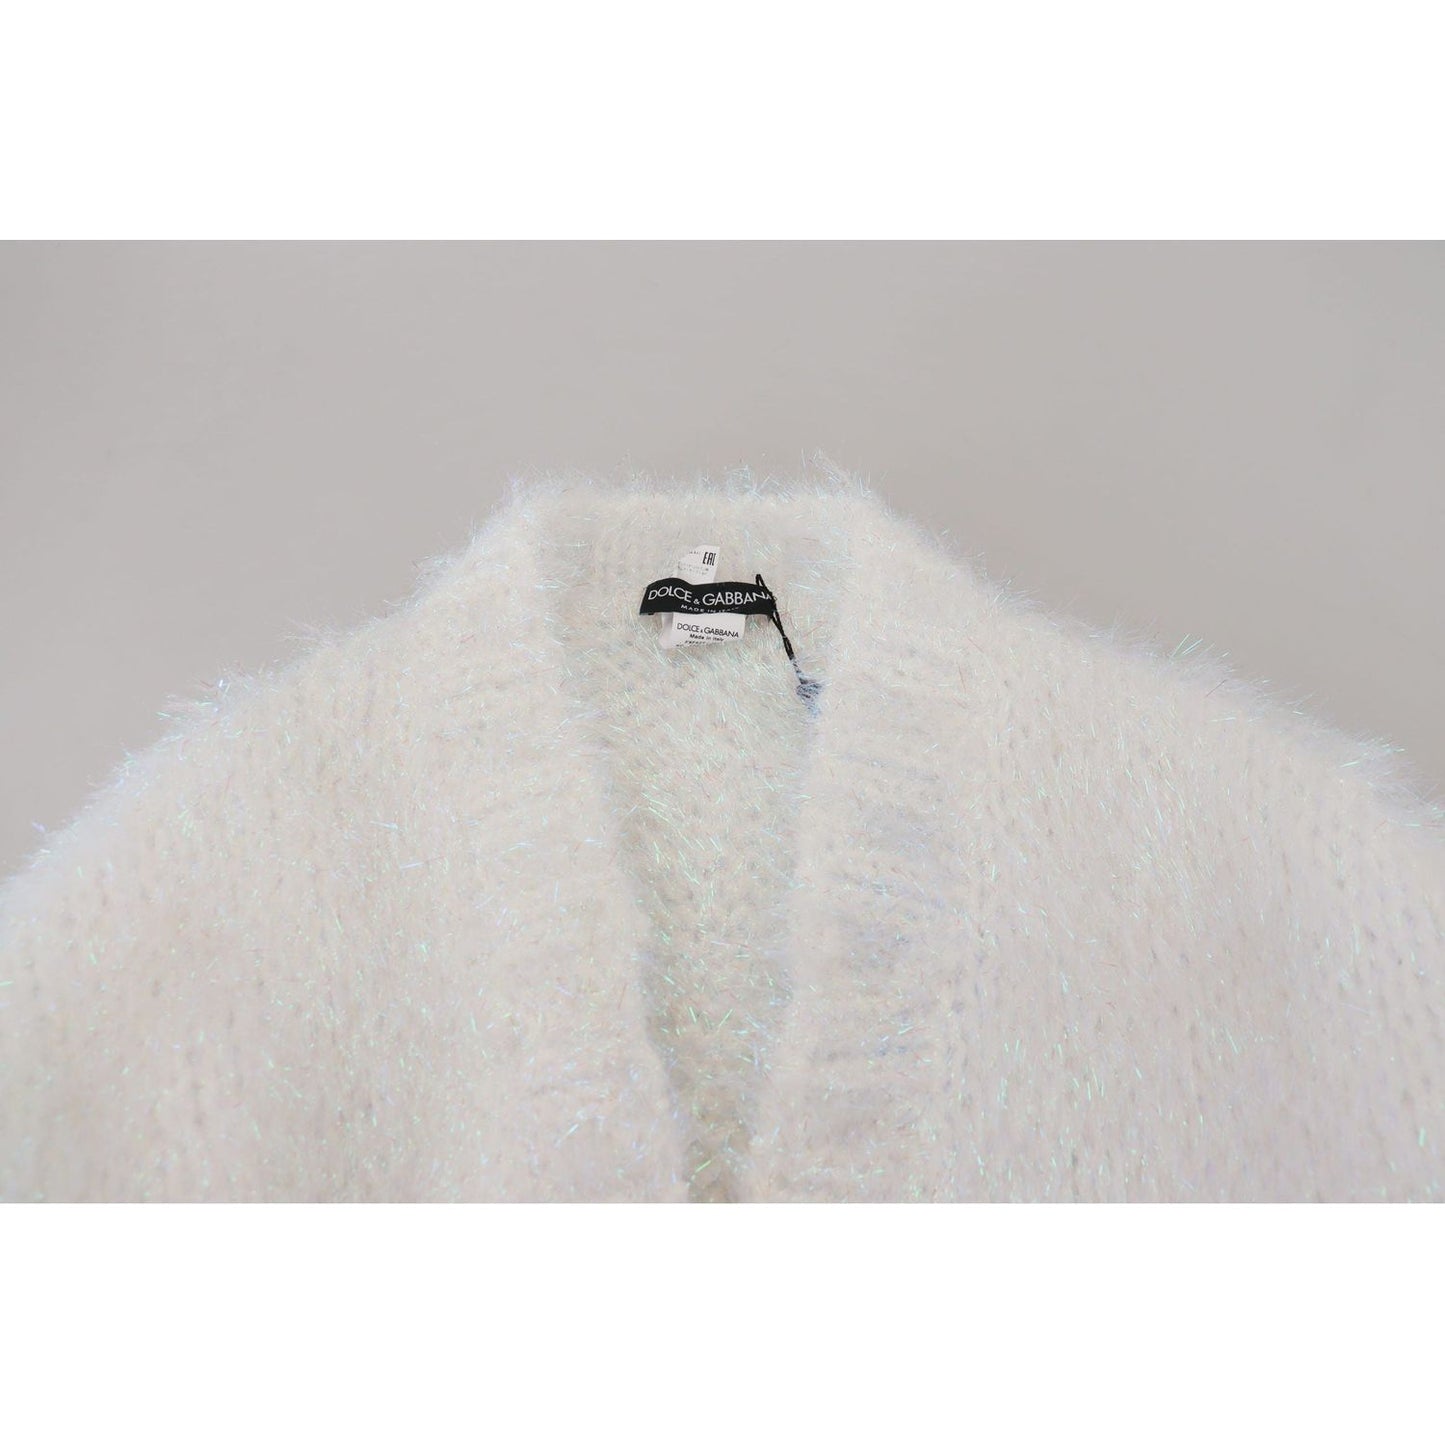 Dolce & GabbanaElegant White Long Sleeve Cardigan JacketMcRichard Designer Brands£2219.00